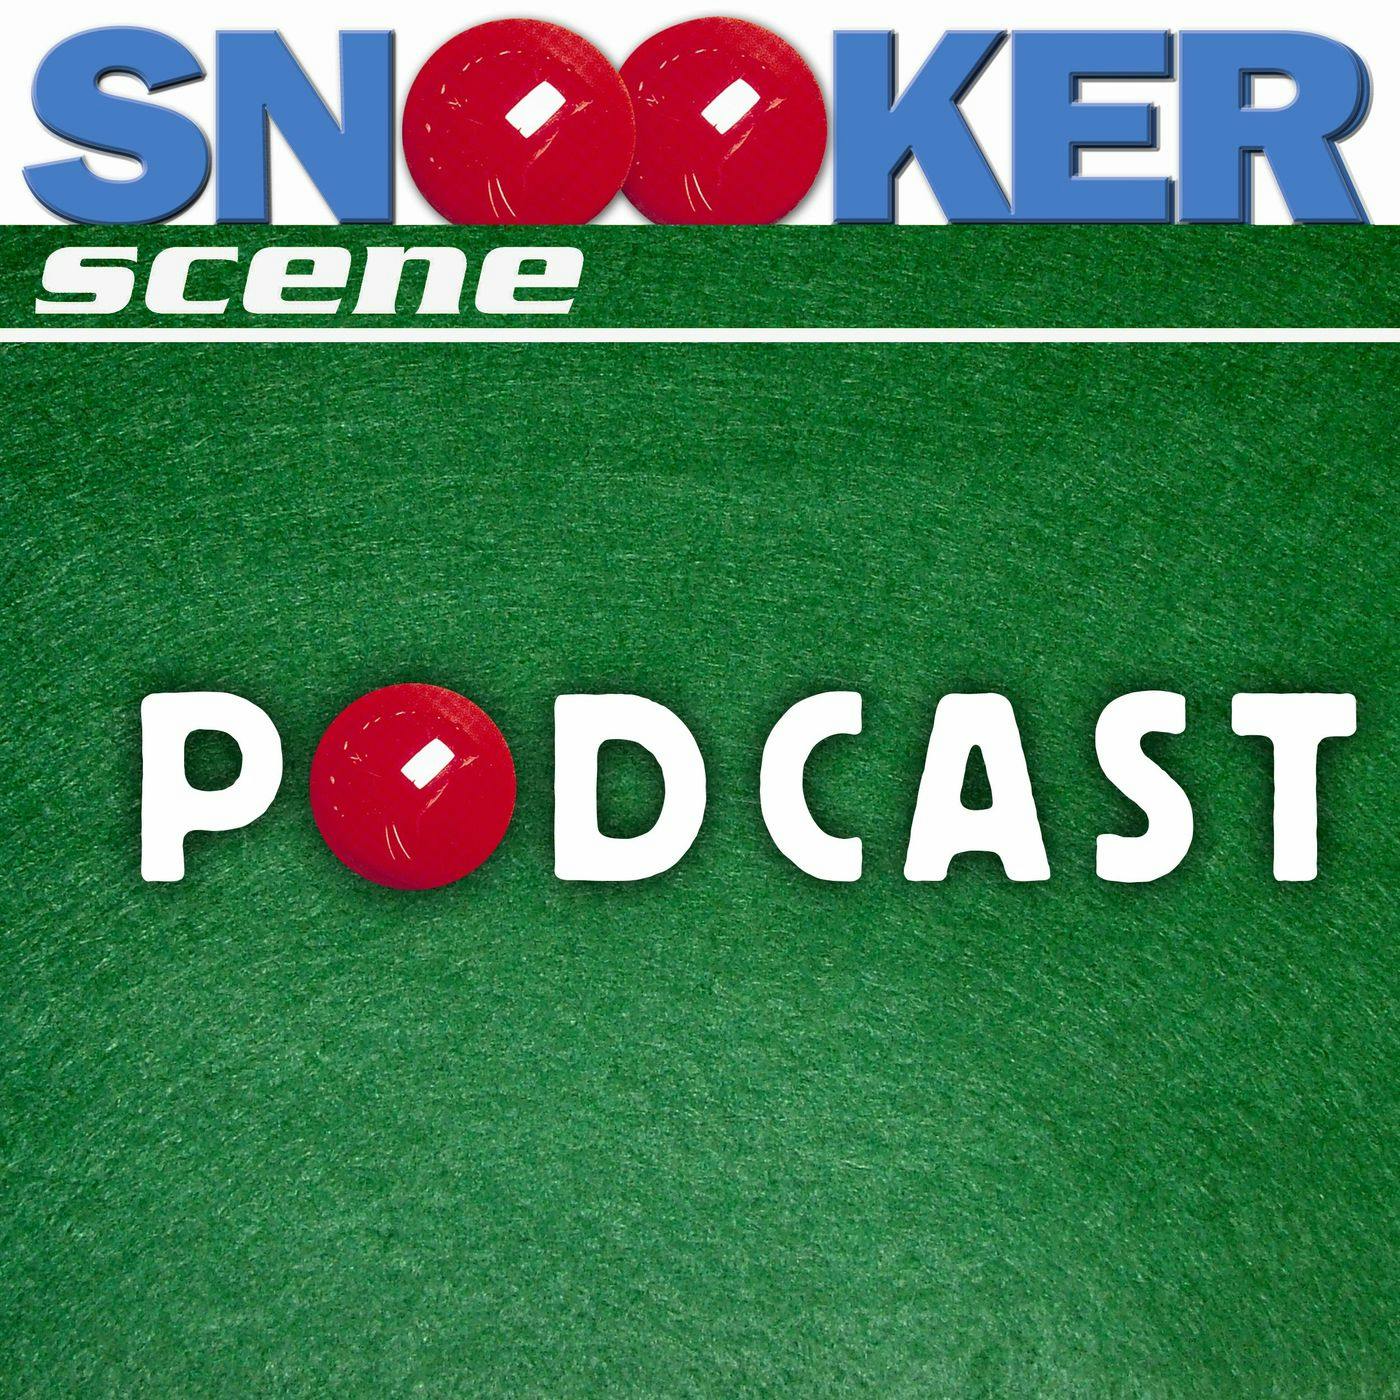 Snooker Scene Podcast episode 173 - Dave Tindall returns